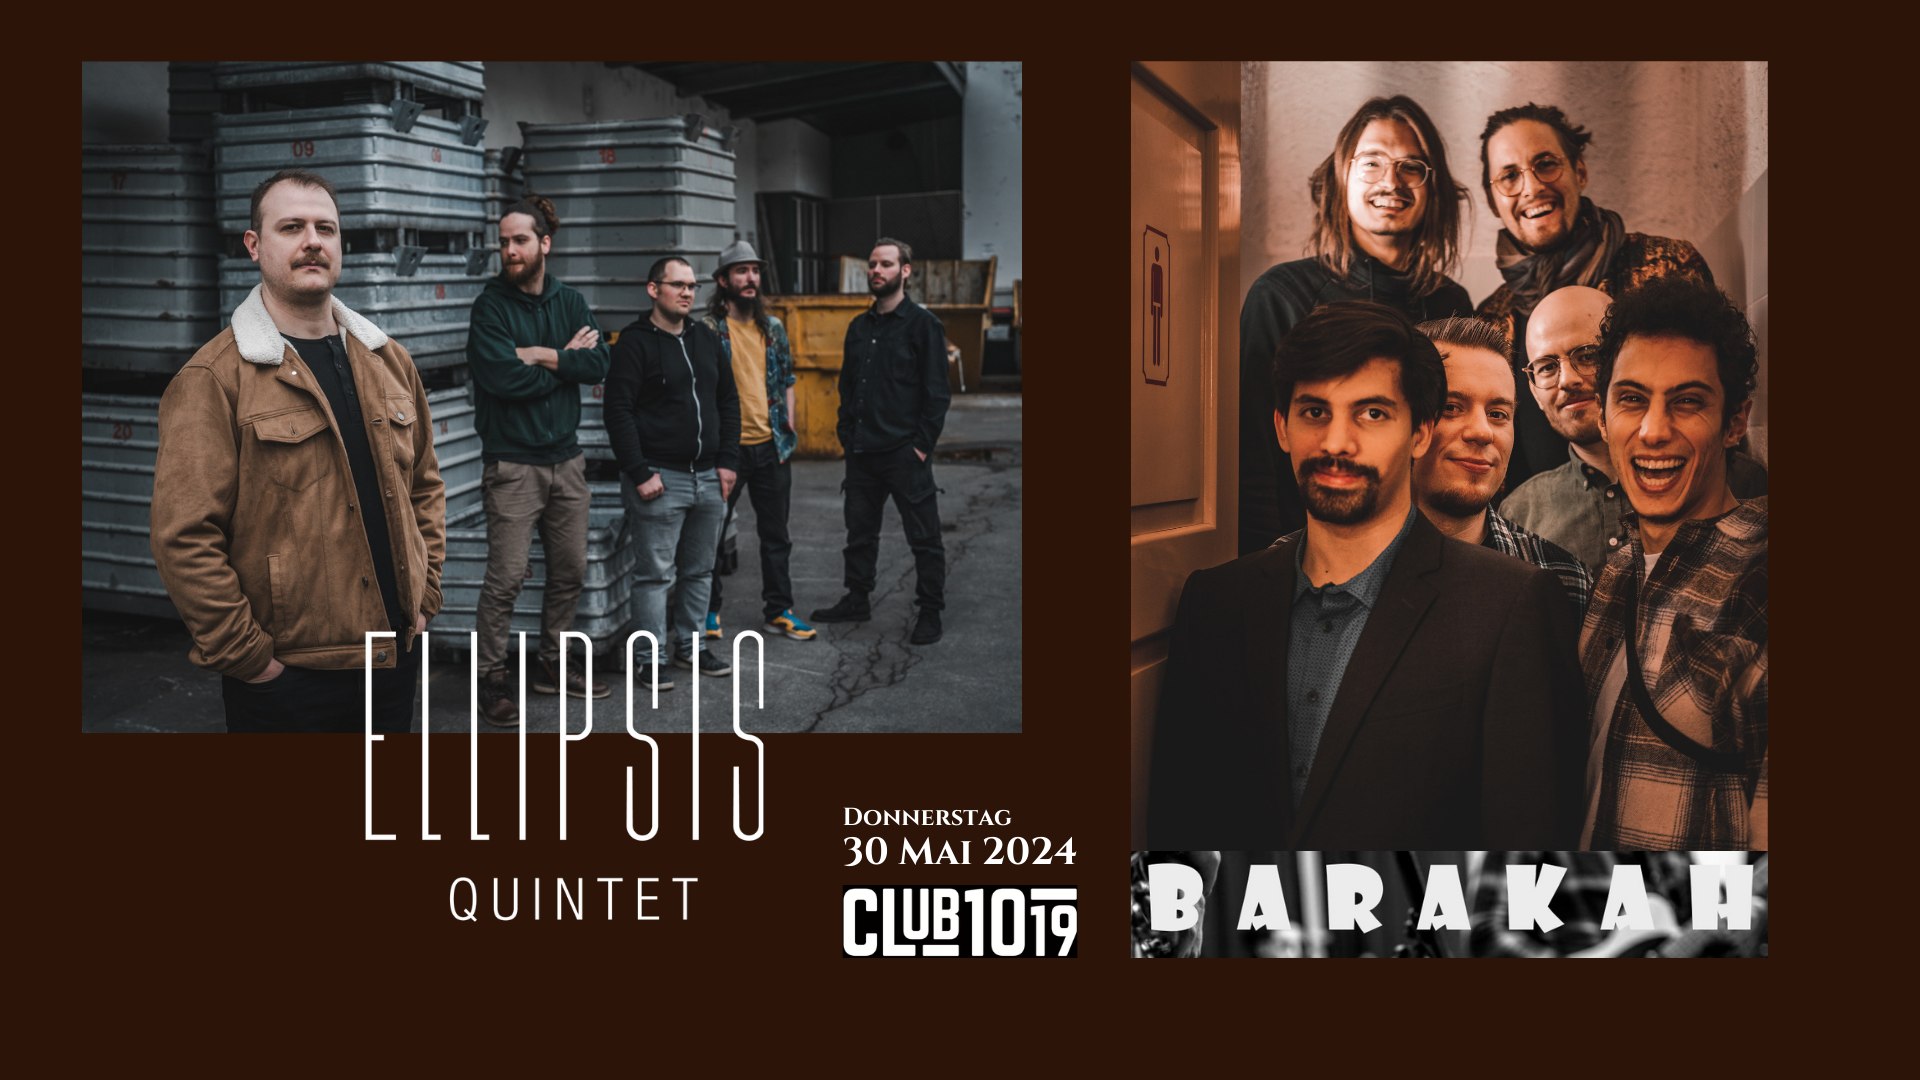 Ellipsis Quintet + Barakah am 30. May 2024 @ Club 1019.